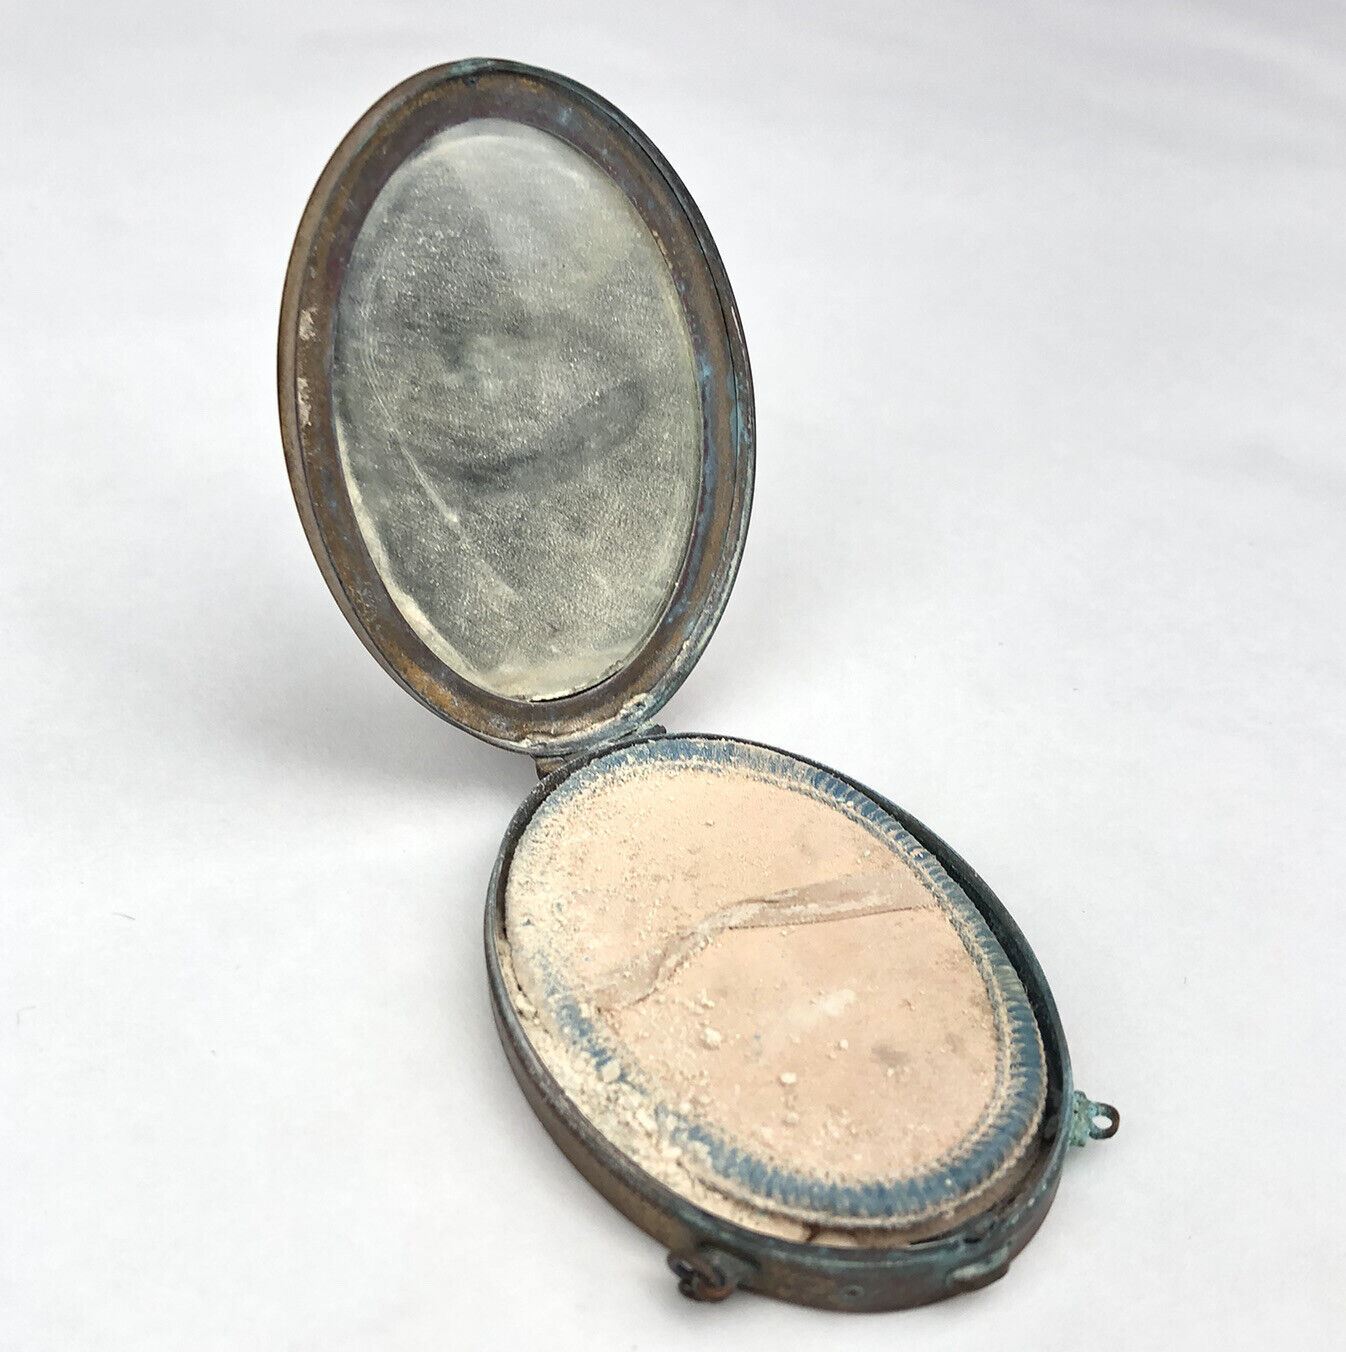 Antique Philadelphia Sesquicentennial 1926 Powder Compact Cosmetic Makeup Case